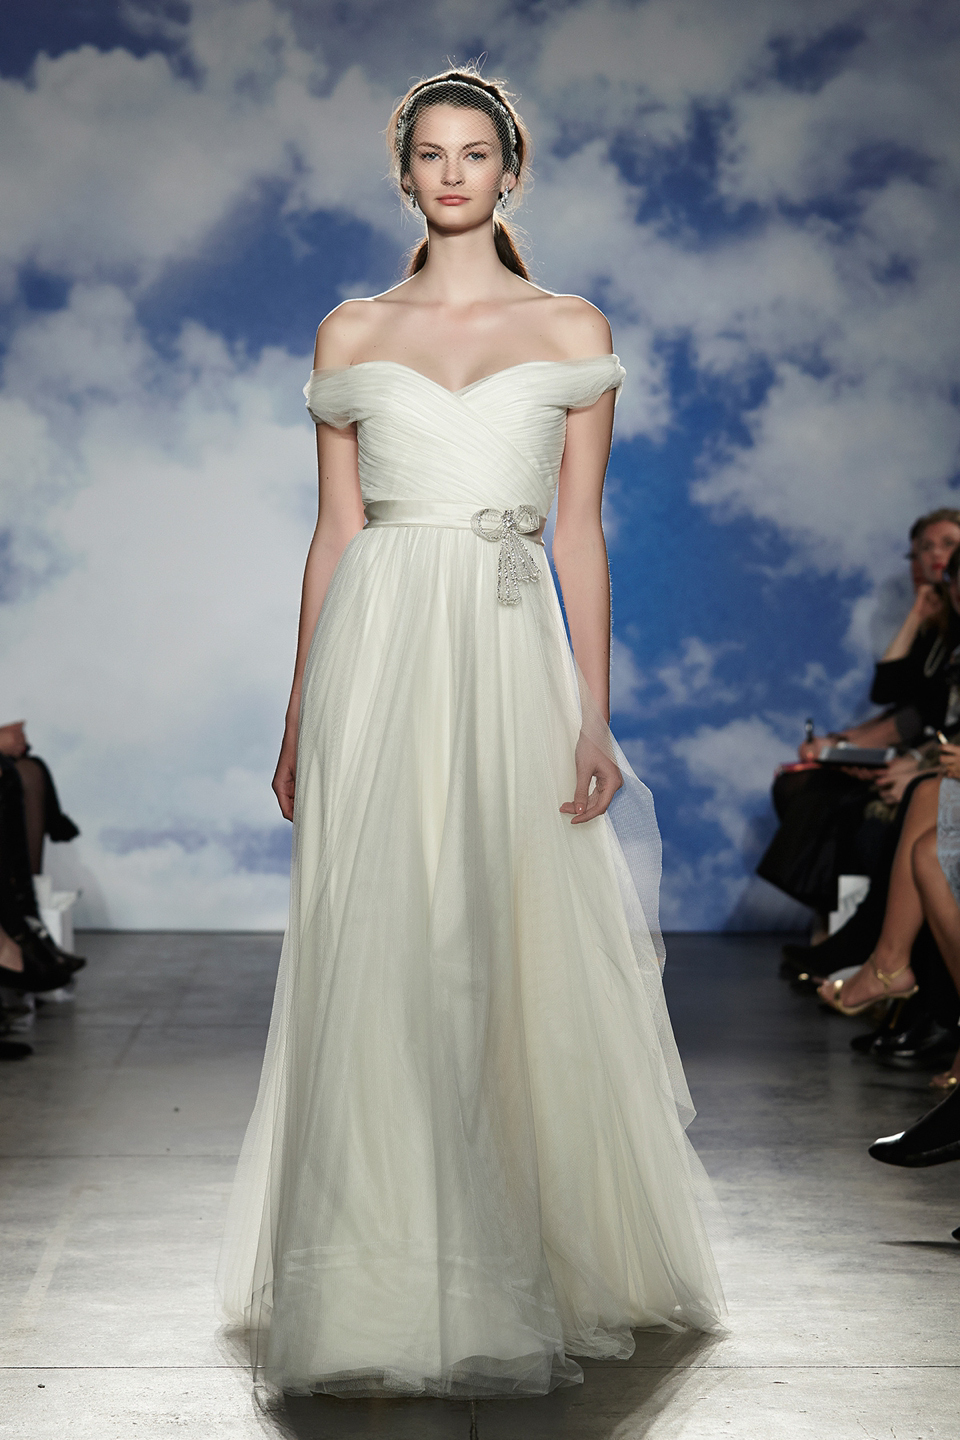 Jenny Packhams Sophisticated and Elegant Wedding Dresses for 2015